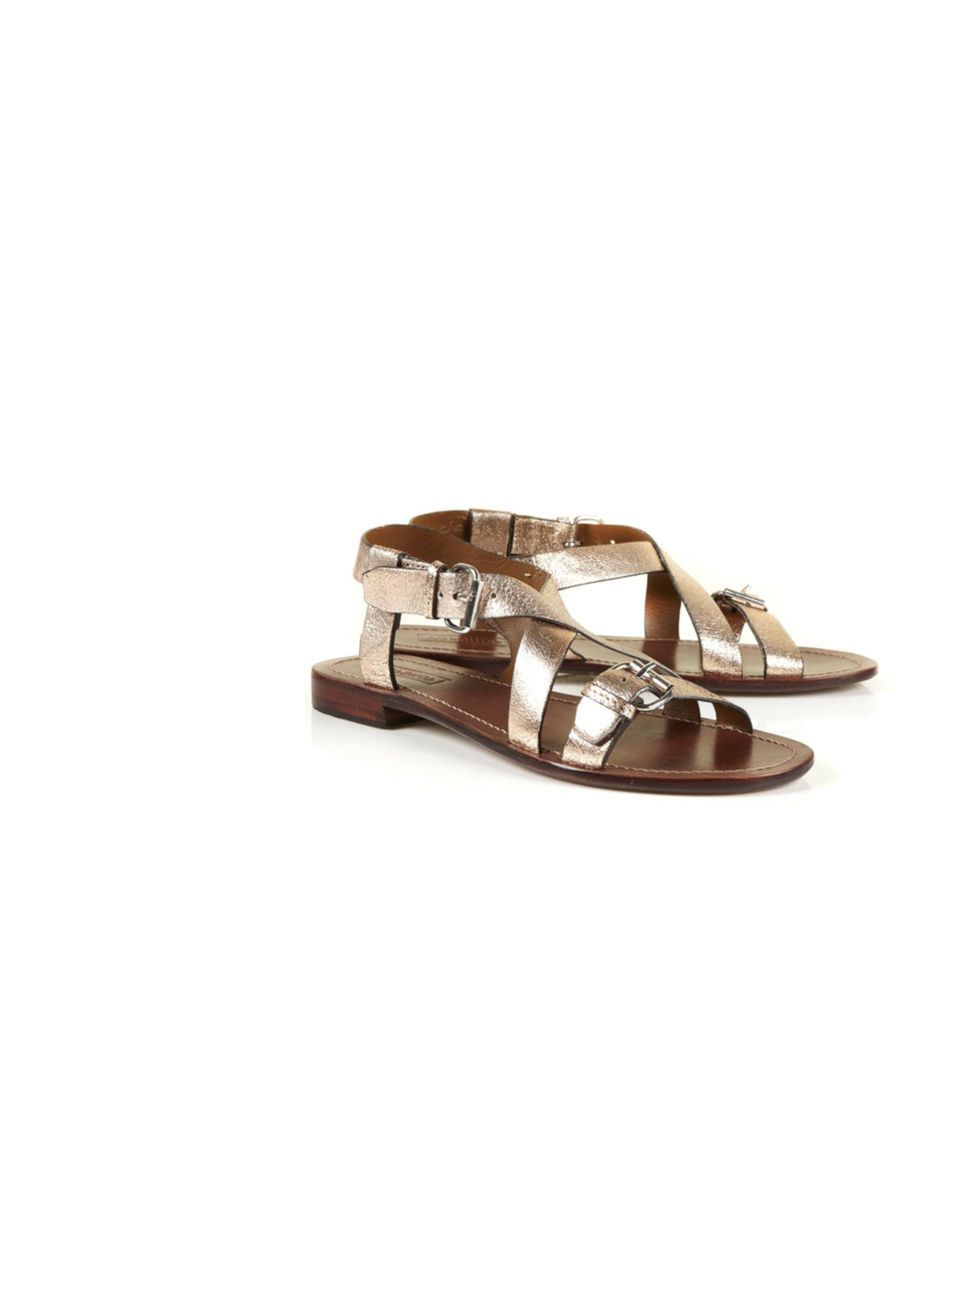 <p>Topshop metallic strappy sandals, £38</p><p><a href="http://shopping.elleuk.com/browse?fts=topshop+florida+sandals">BUY NOW</a></p>